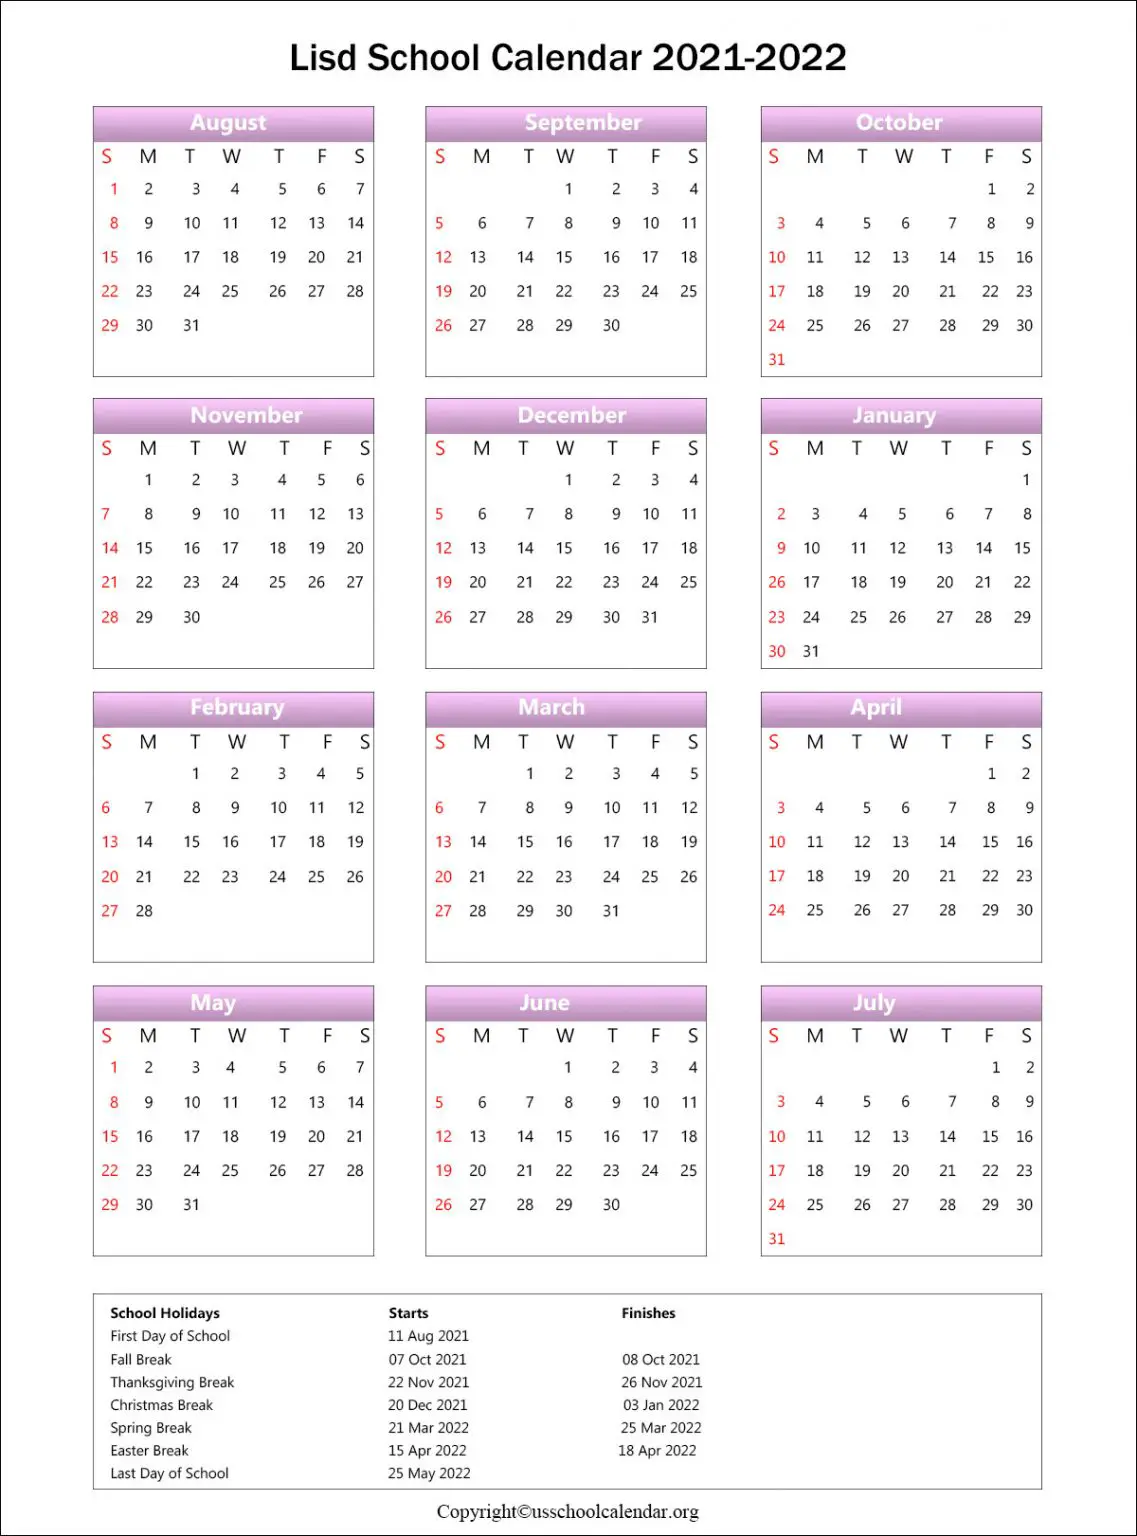 LISD School Calendar with Holidays 20212022 (Lewisville ISD School)